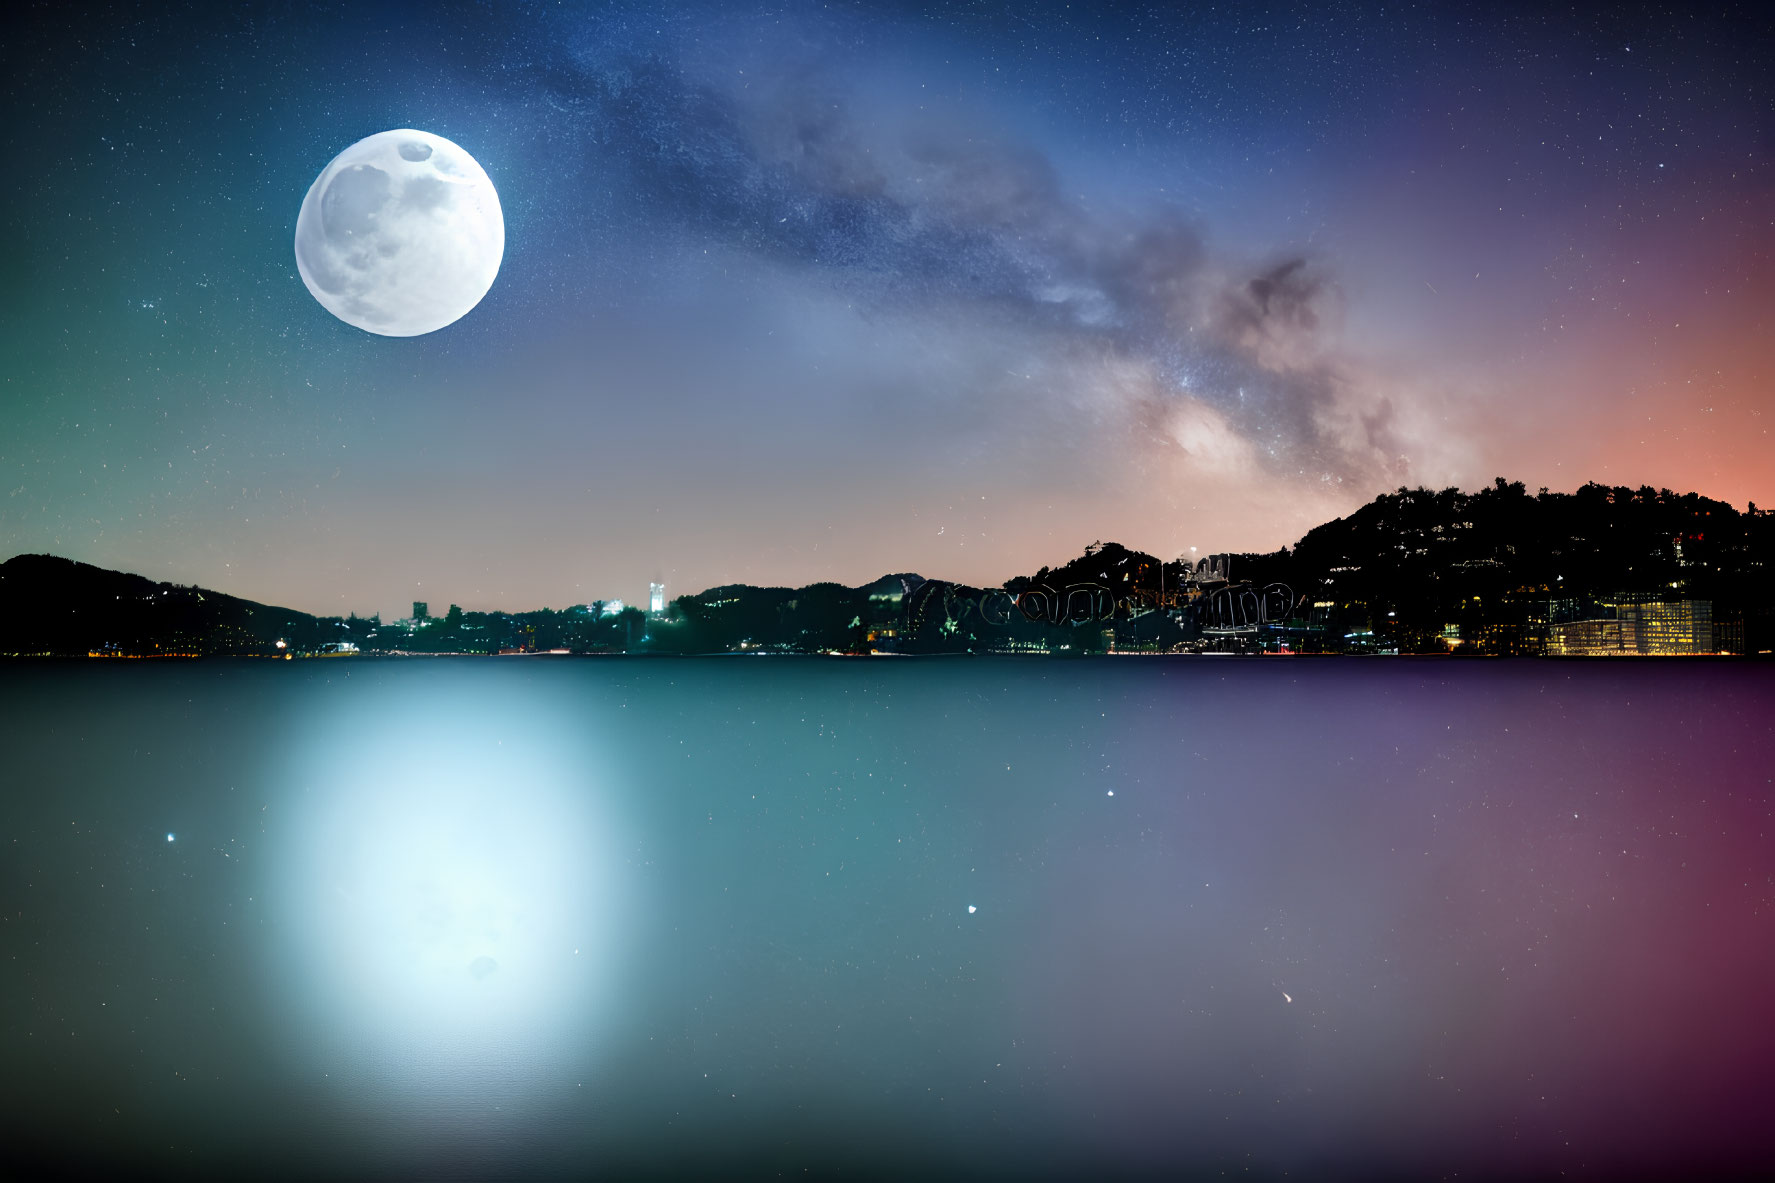 Serene coastal city nightscape with moonlit bay